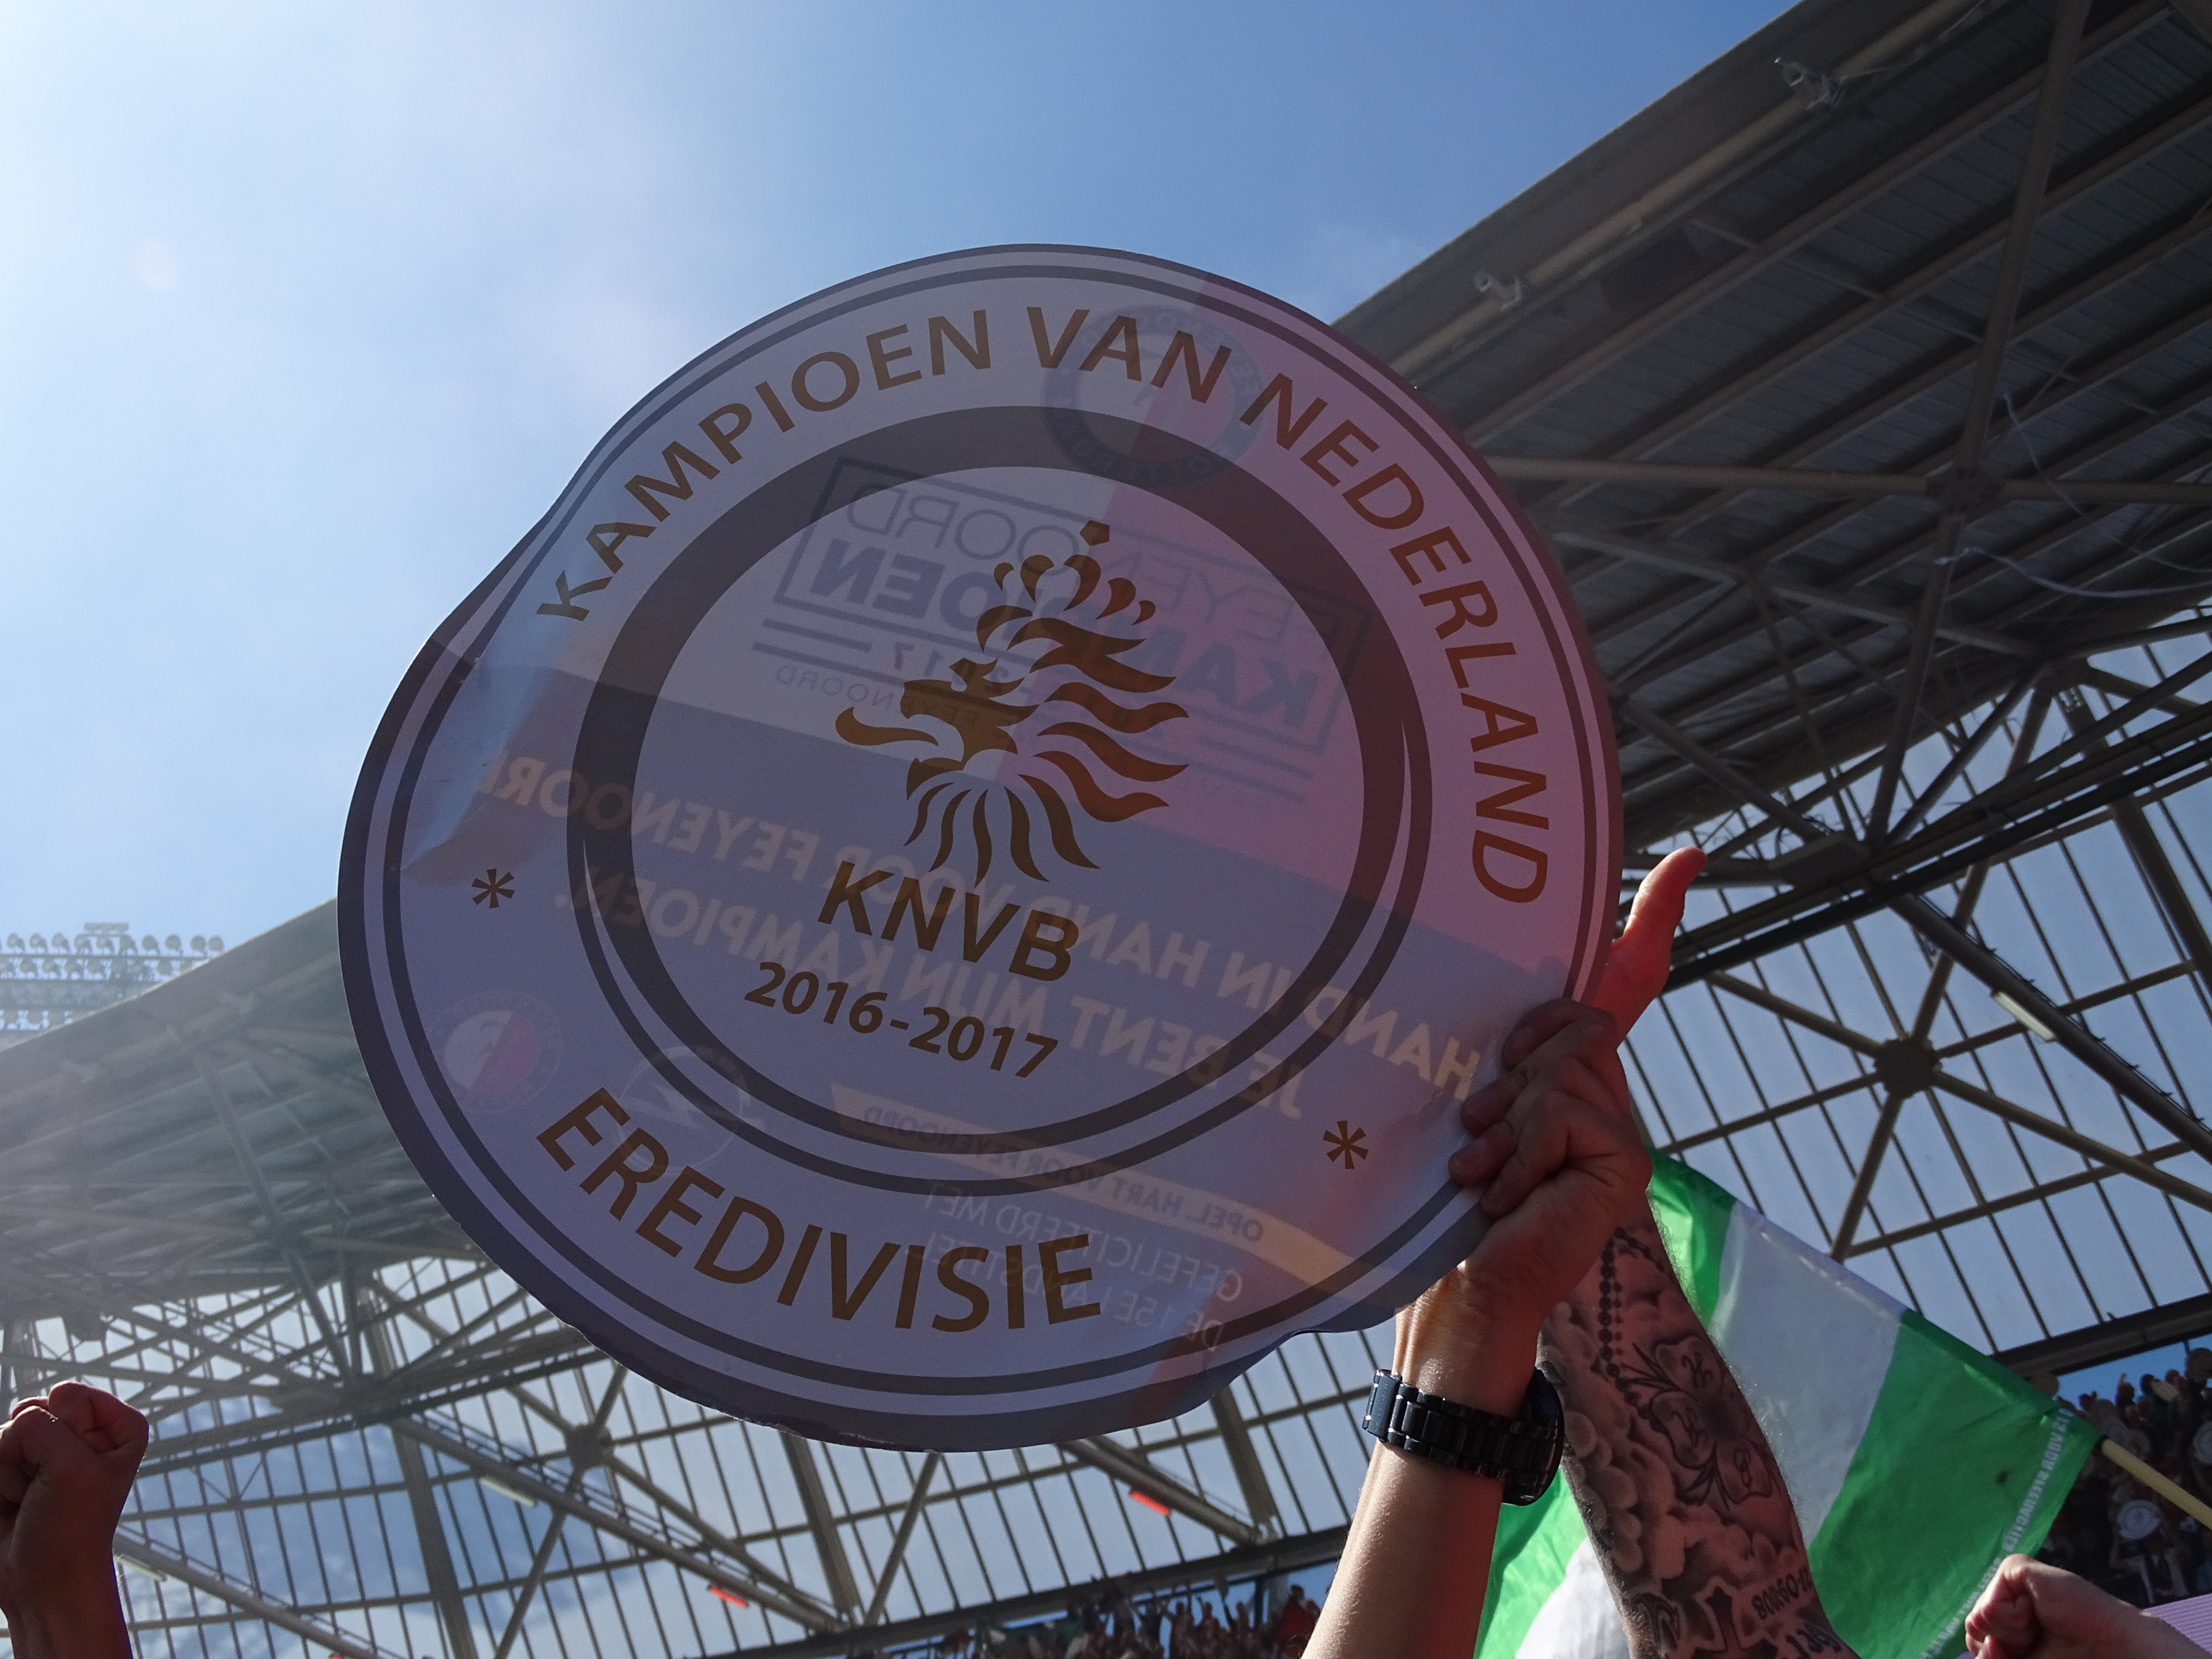 Kampioenskoorts bij Feyenoordsupporters